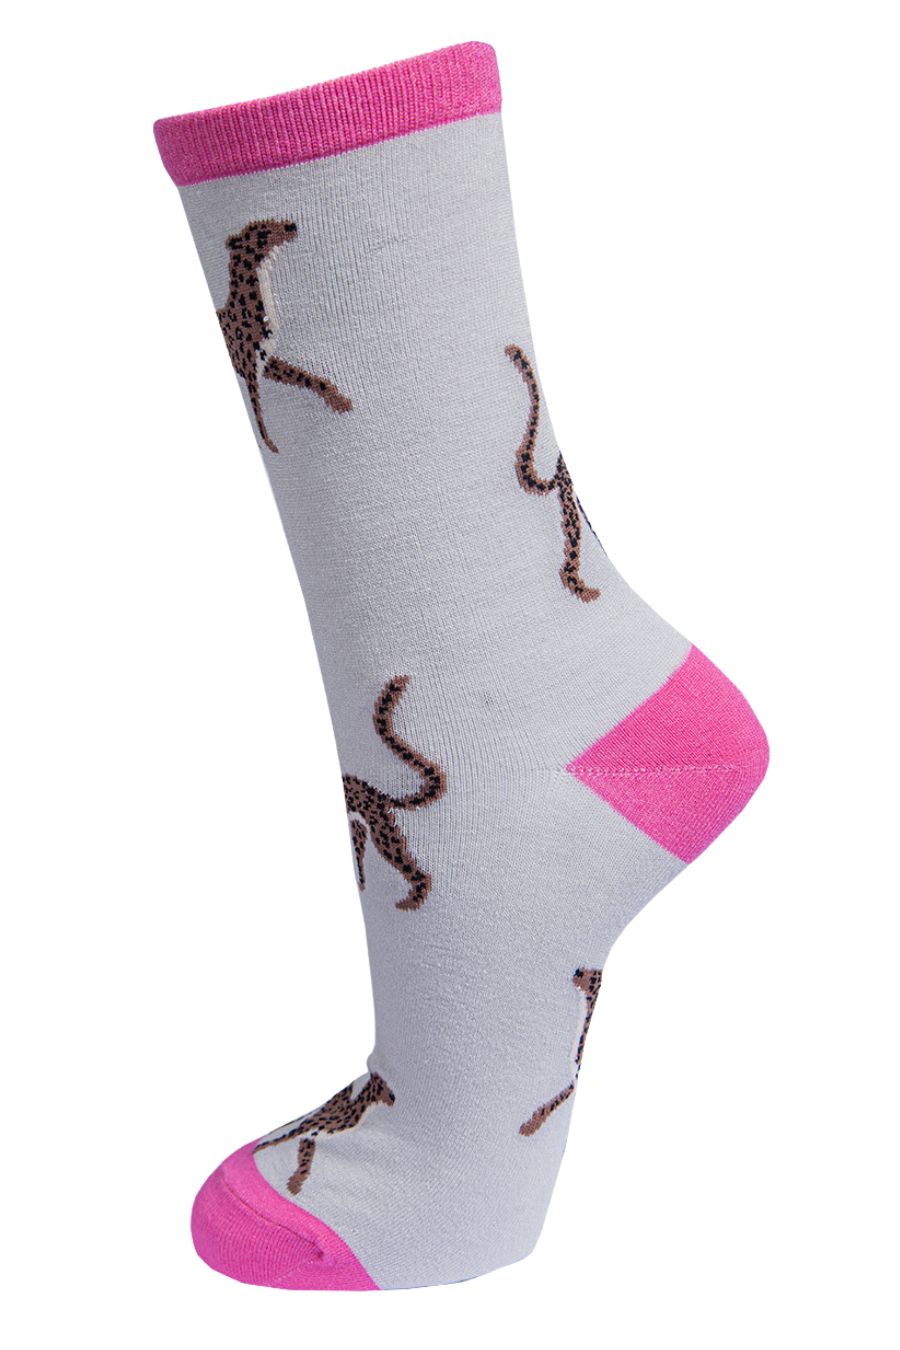 Womens Bamboo Ankle Socks Leopard Print Cheetah Animal Sock Grey Pink